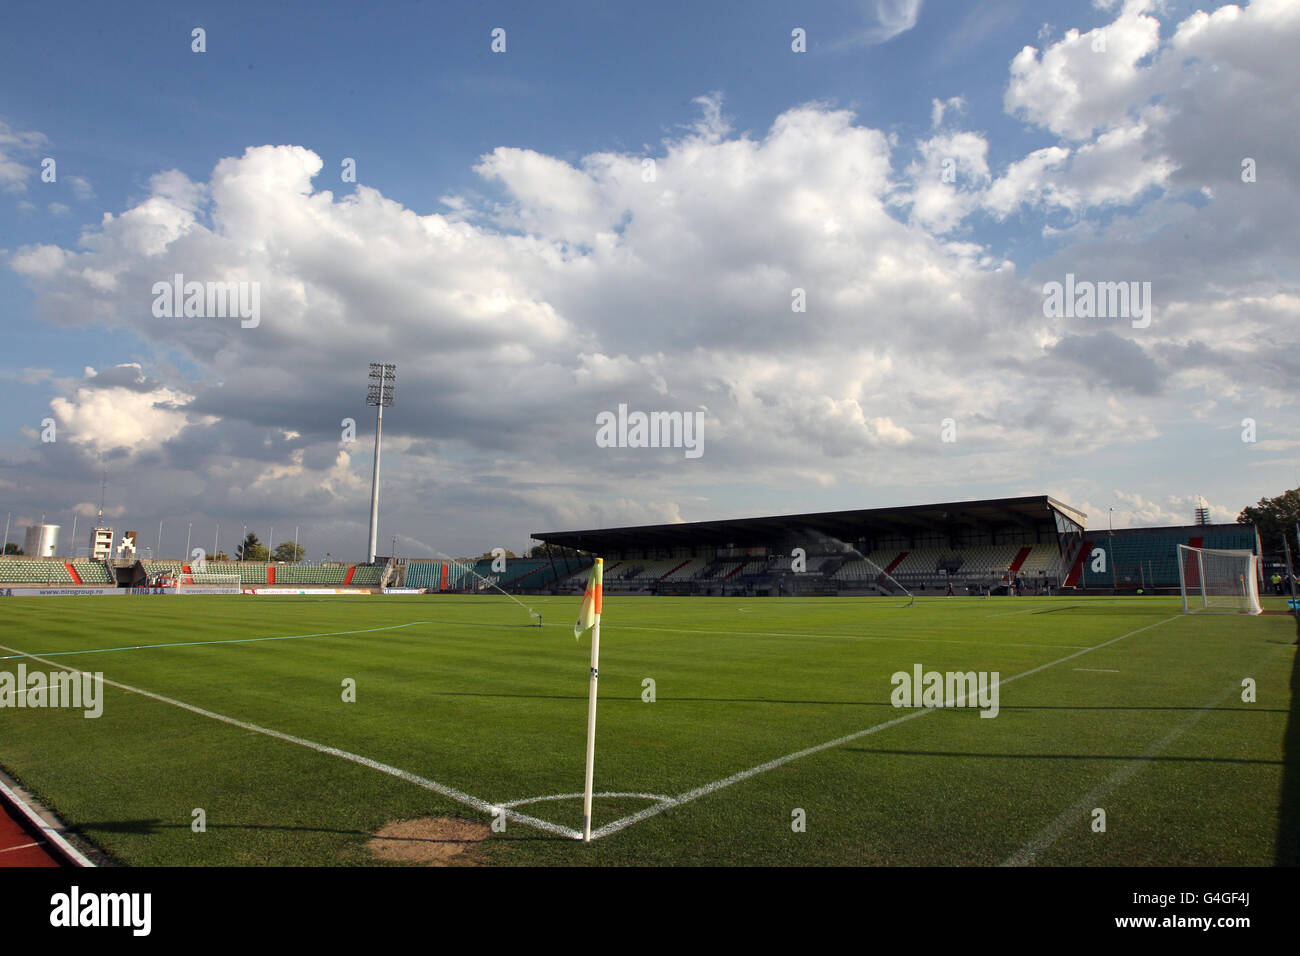 Una vista generale dello stadio Stade Josy Barthel in Lussemburgo Foto  stock - Alamy